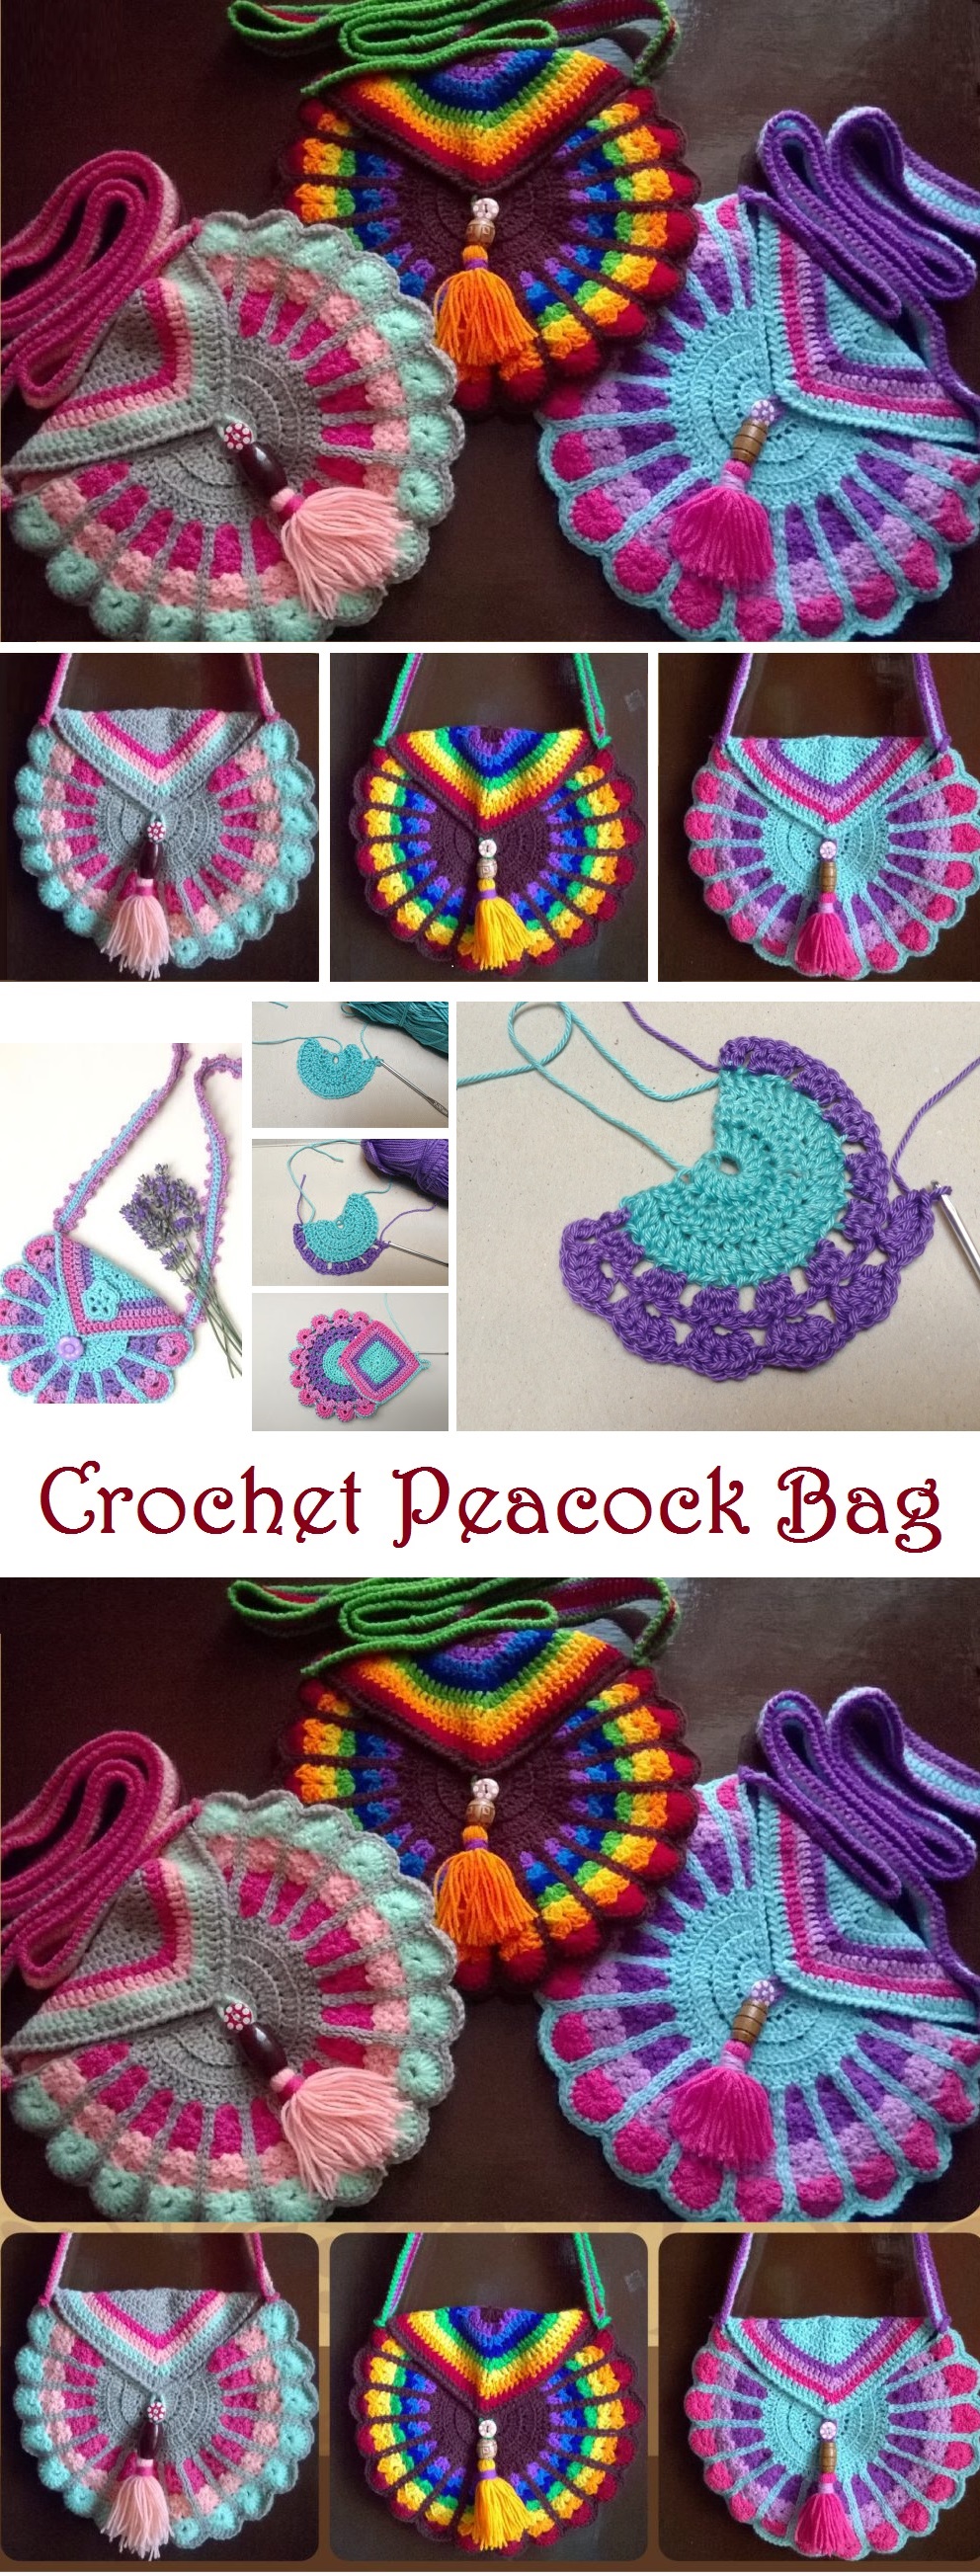 Crochet Peacock Bag Tutorial